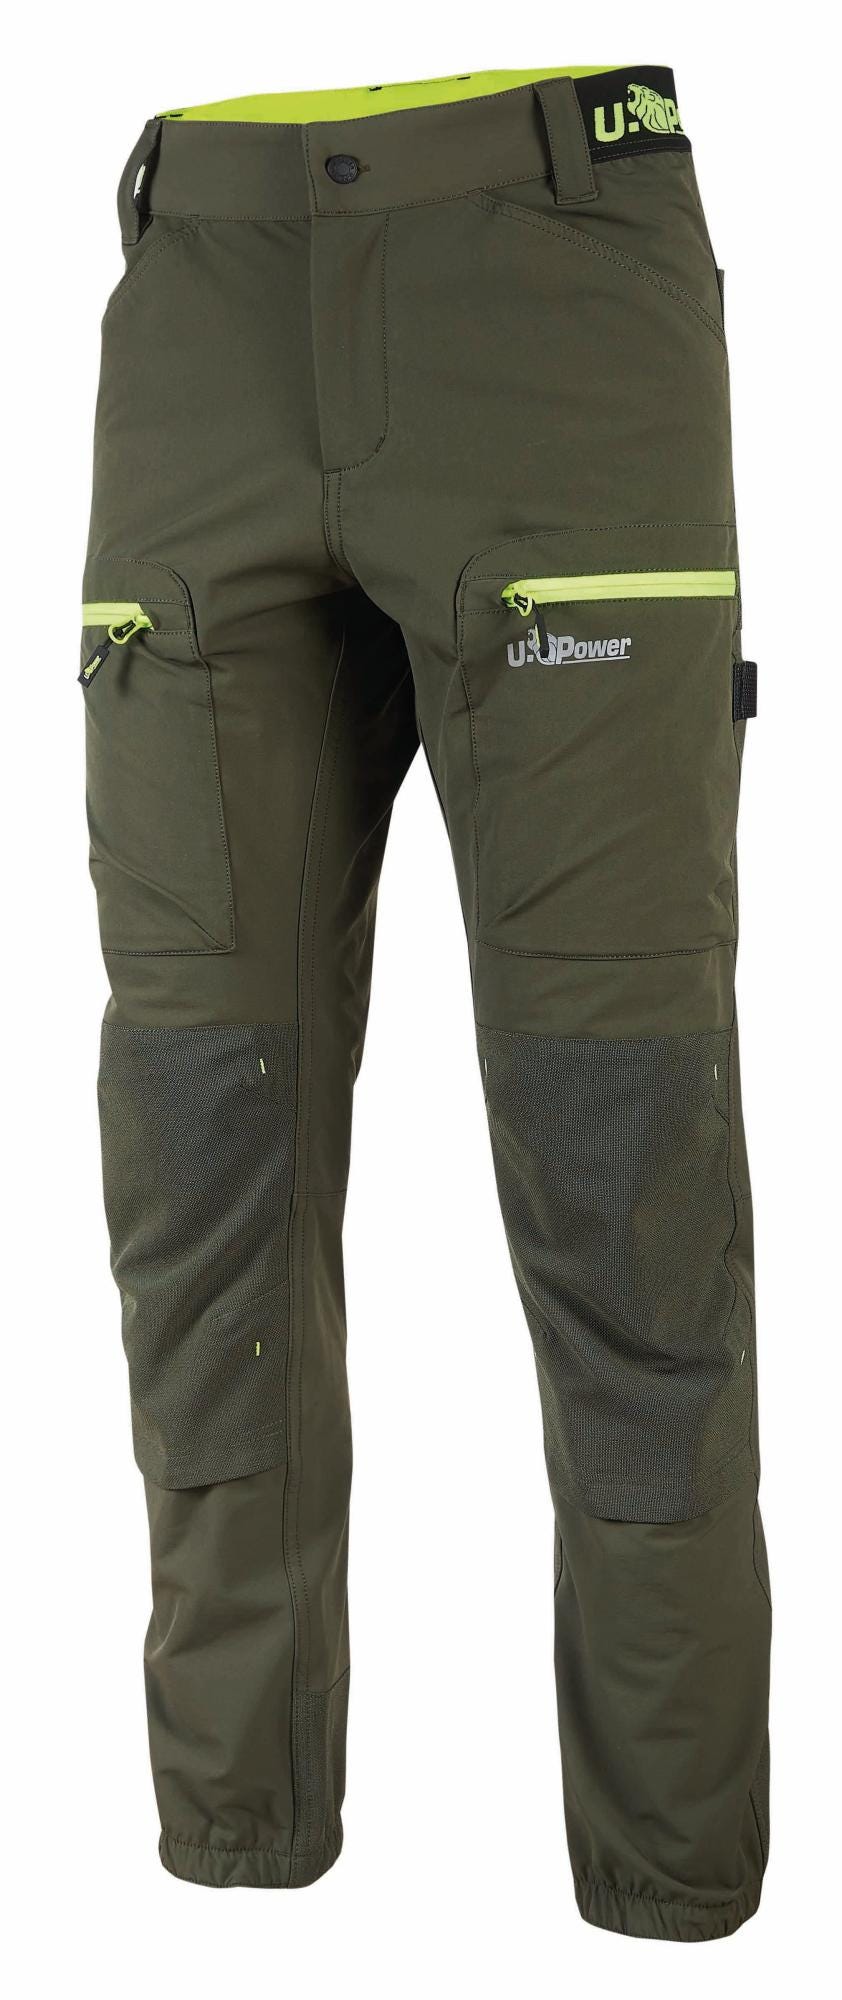 Pantalone da lavoro U-POWER FU281DG verde tg. 4XL